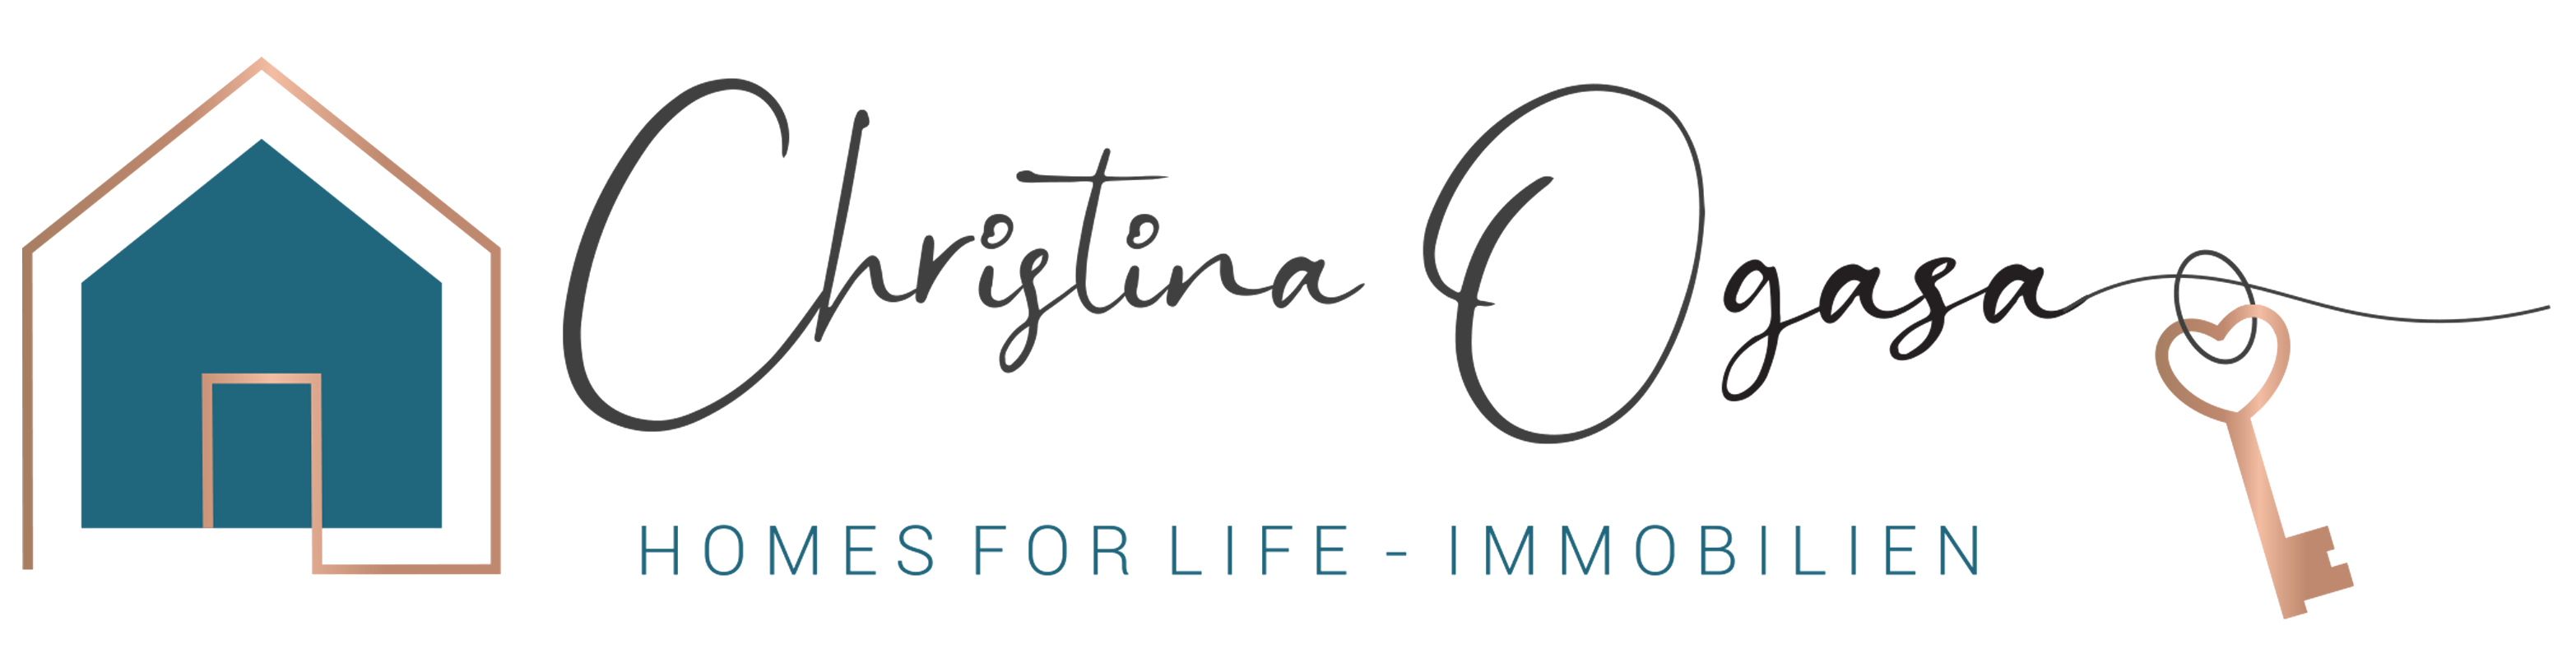 Homes for life – Christina Ogasa – Immobilien